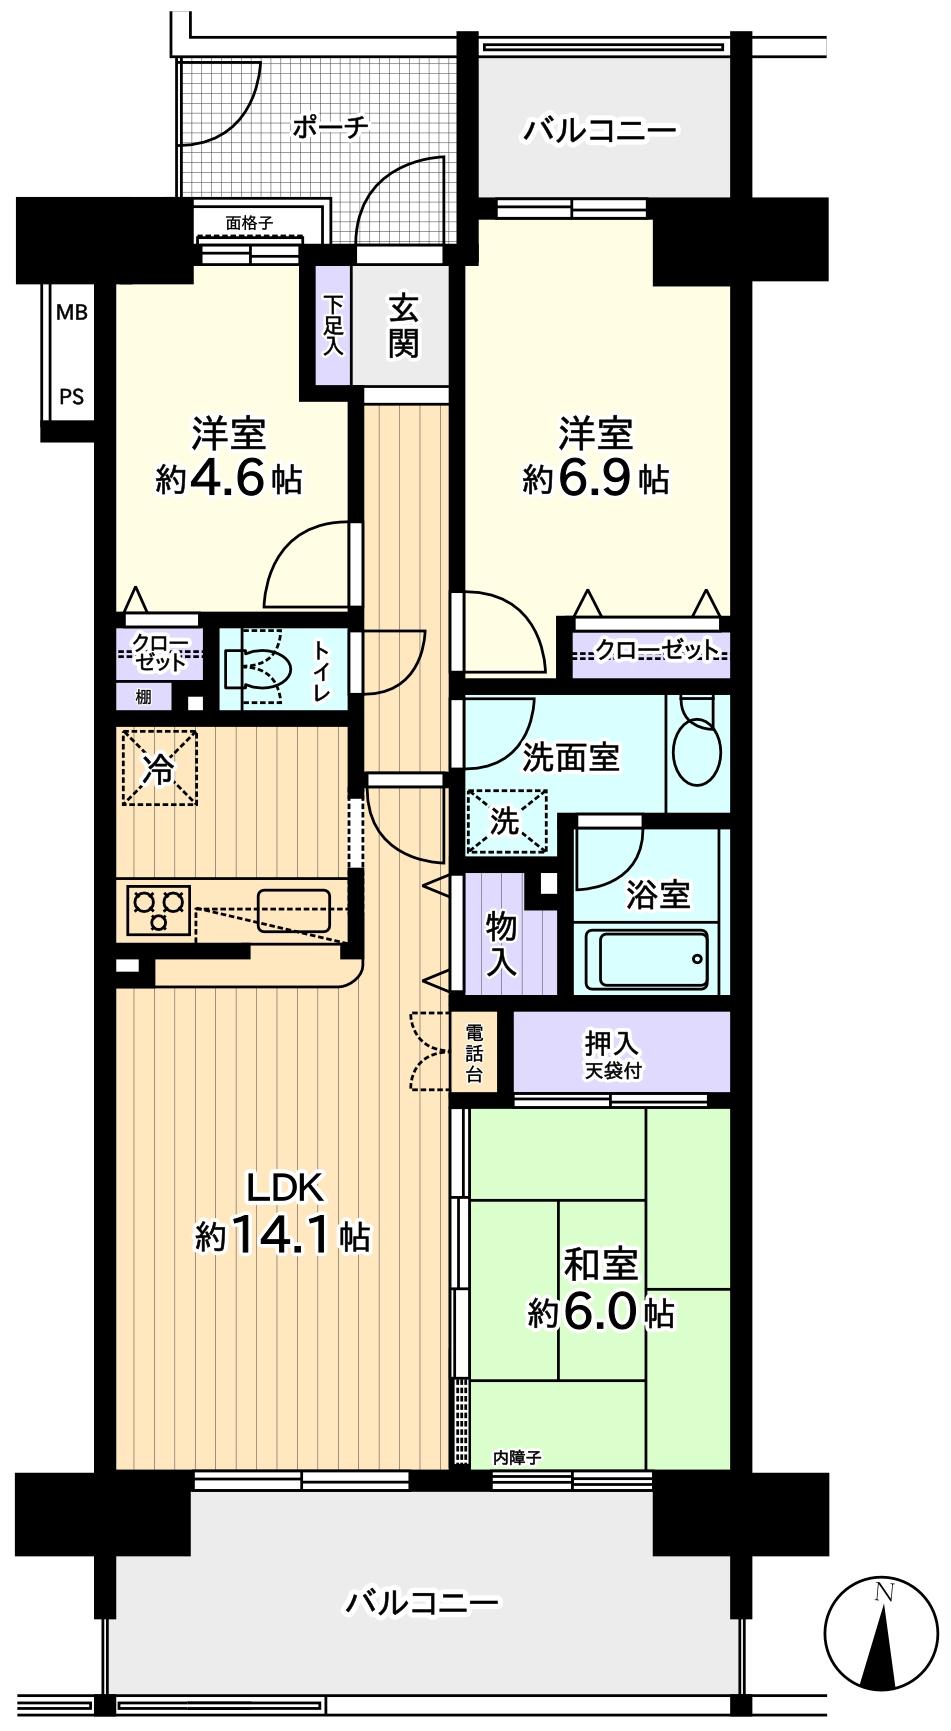 Floor plan. 3LDK, Price 14.5 million yen, Footprint 70.5 sq m , Balcony area 15.9 sq m